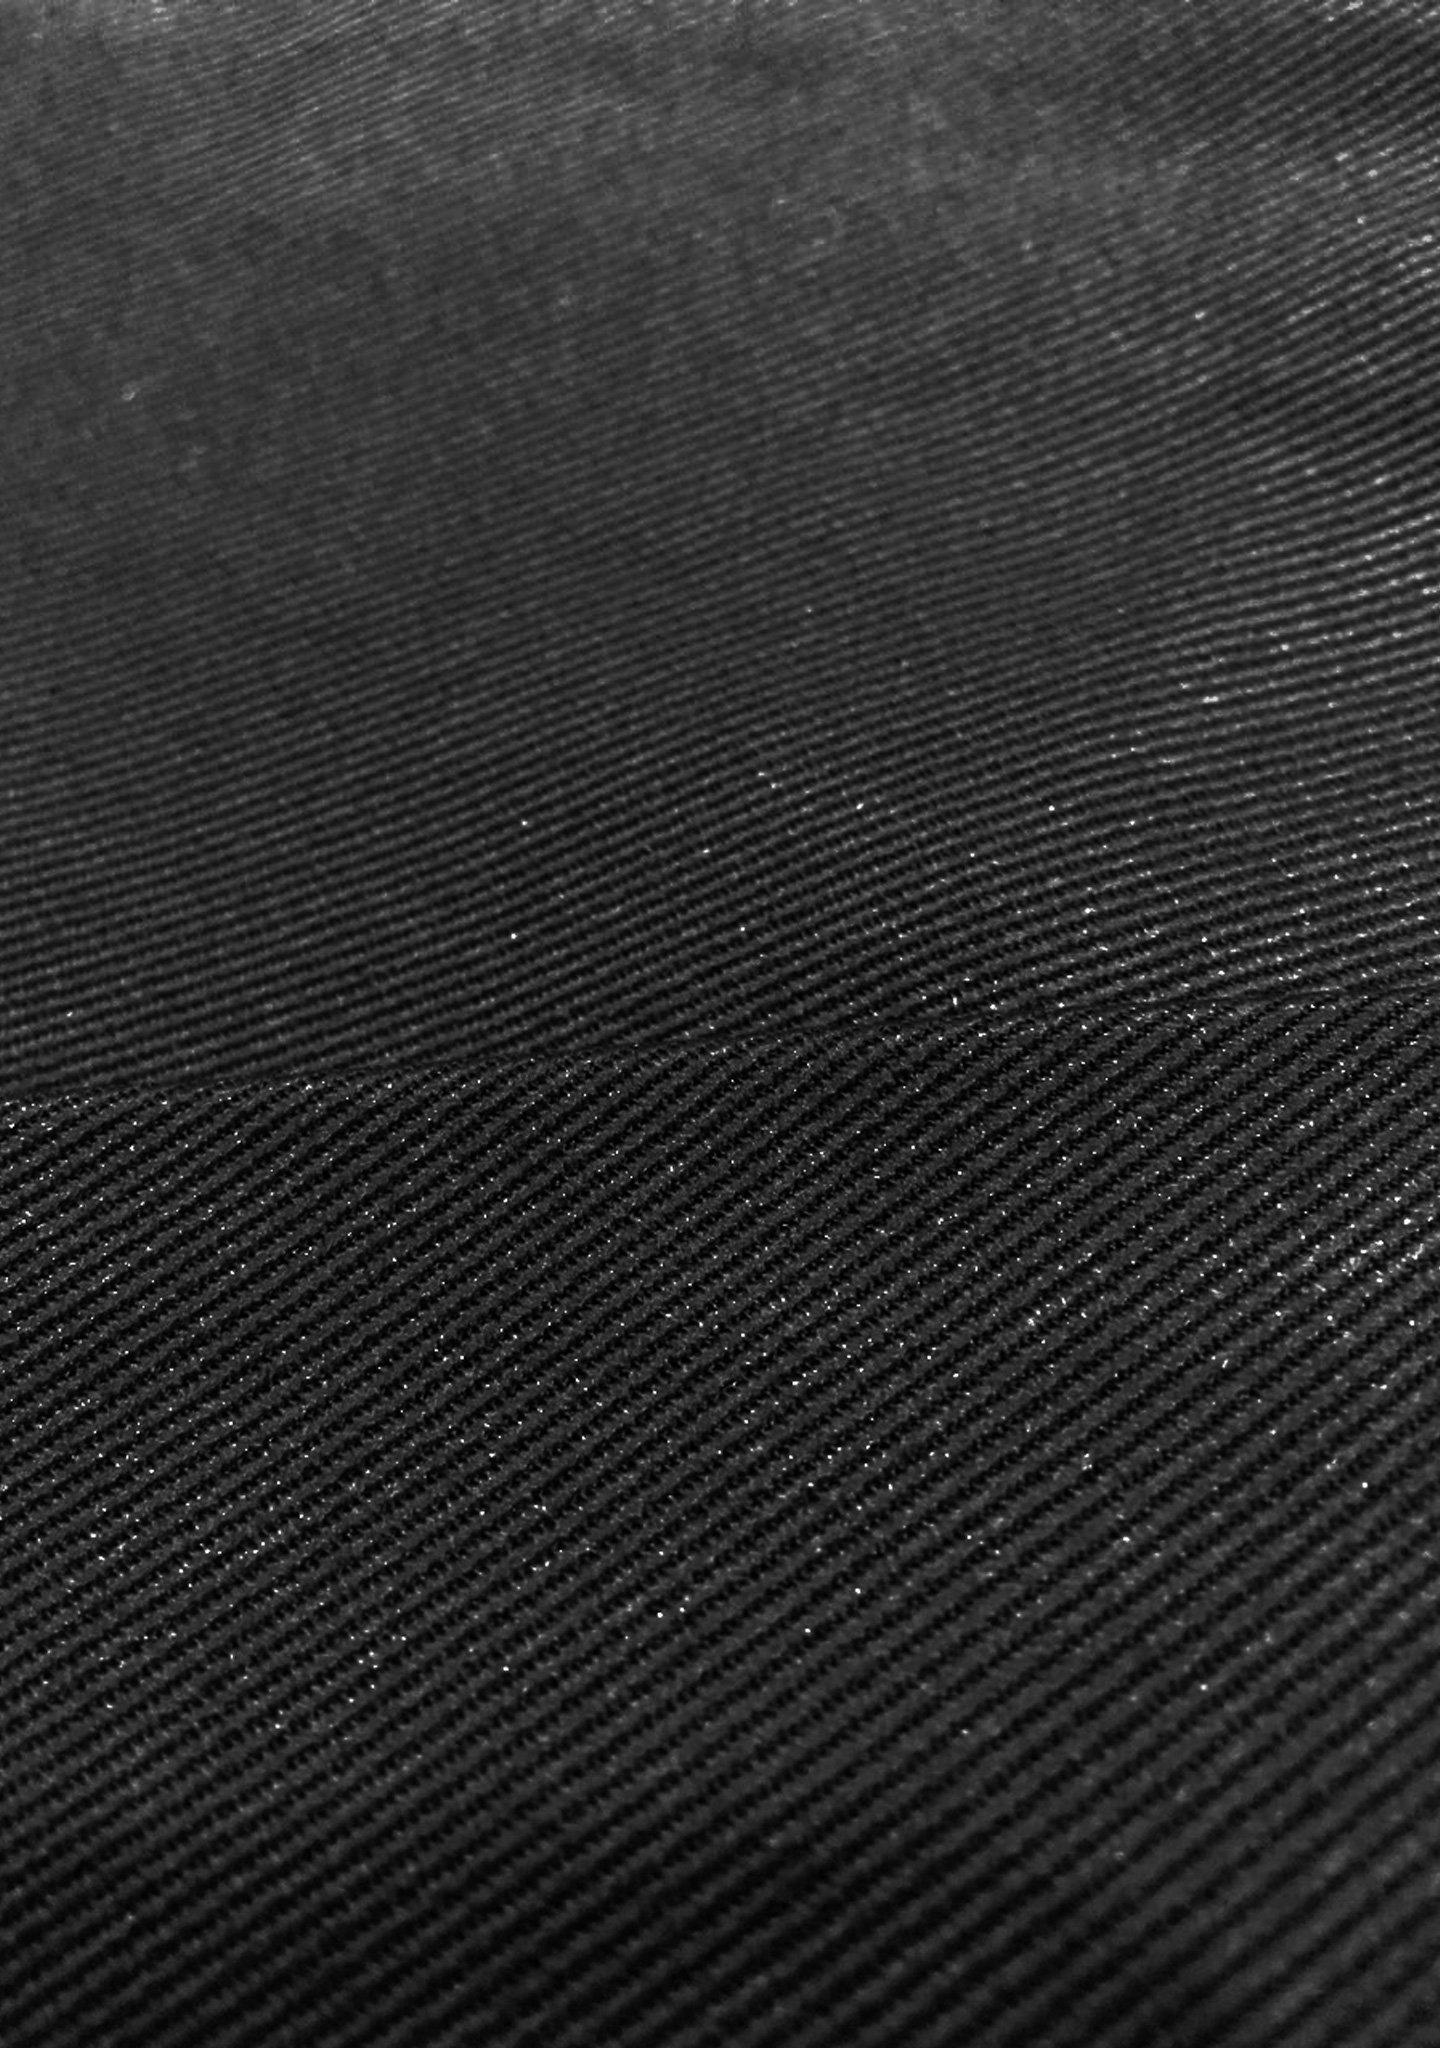 ROSENBURG CUFF PANTS - GRAPHITE BLACK - SALIENT LABEL